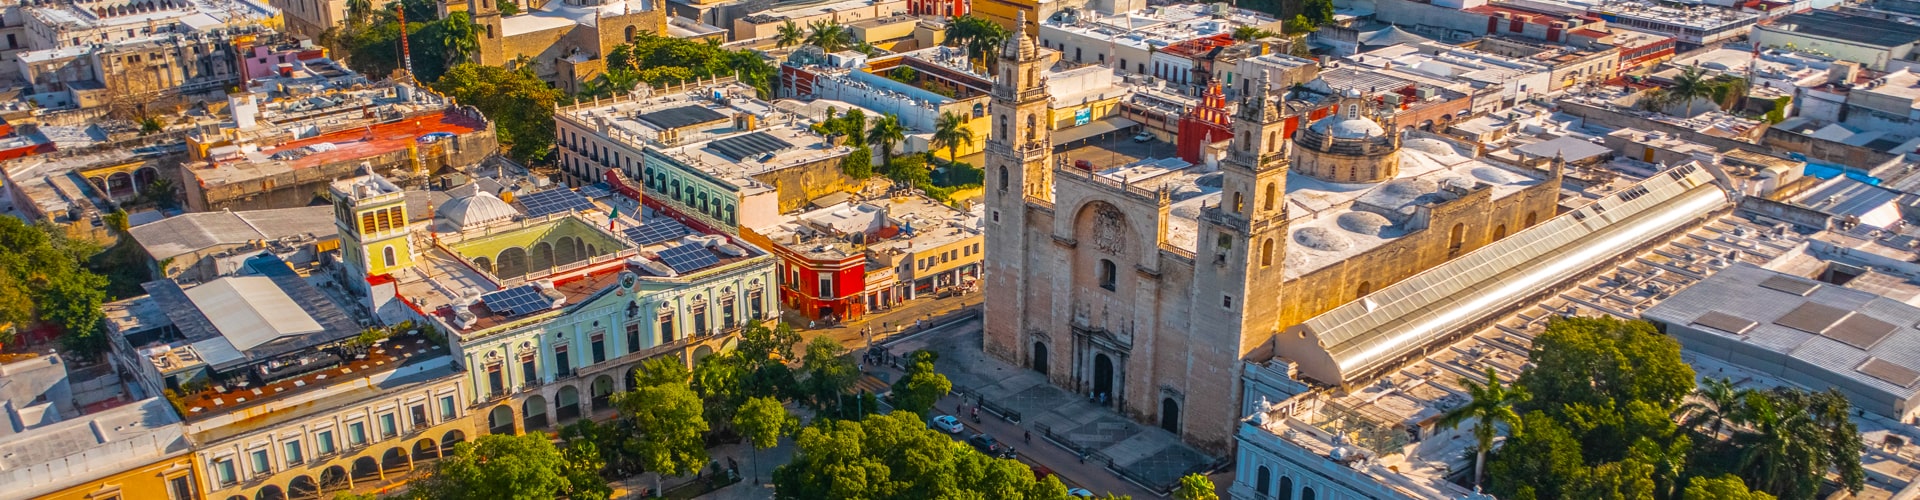 panorama de la ville de mérida au yucatan